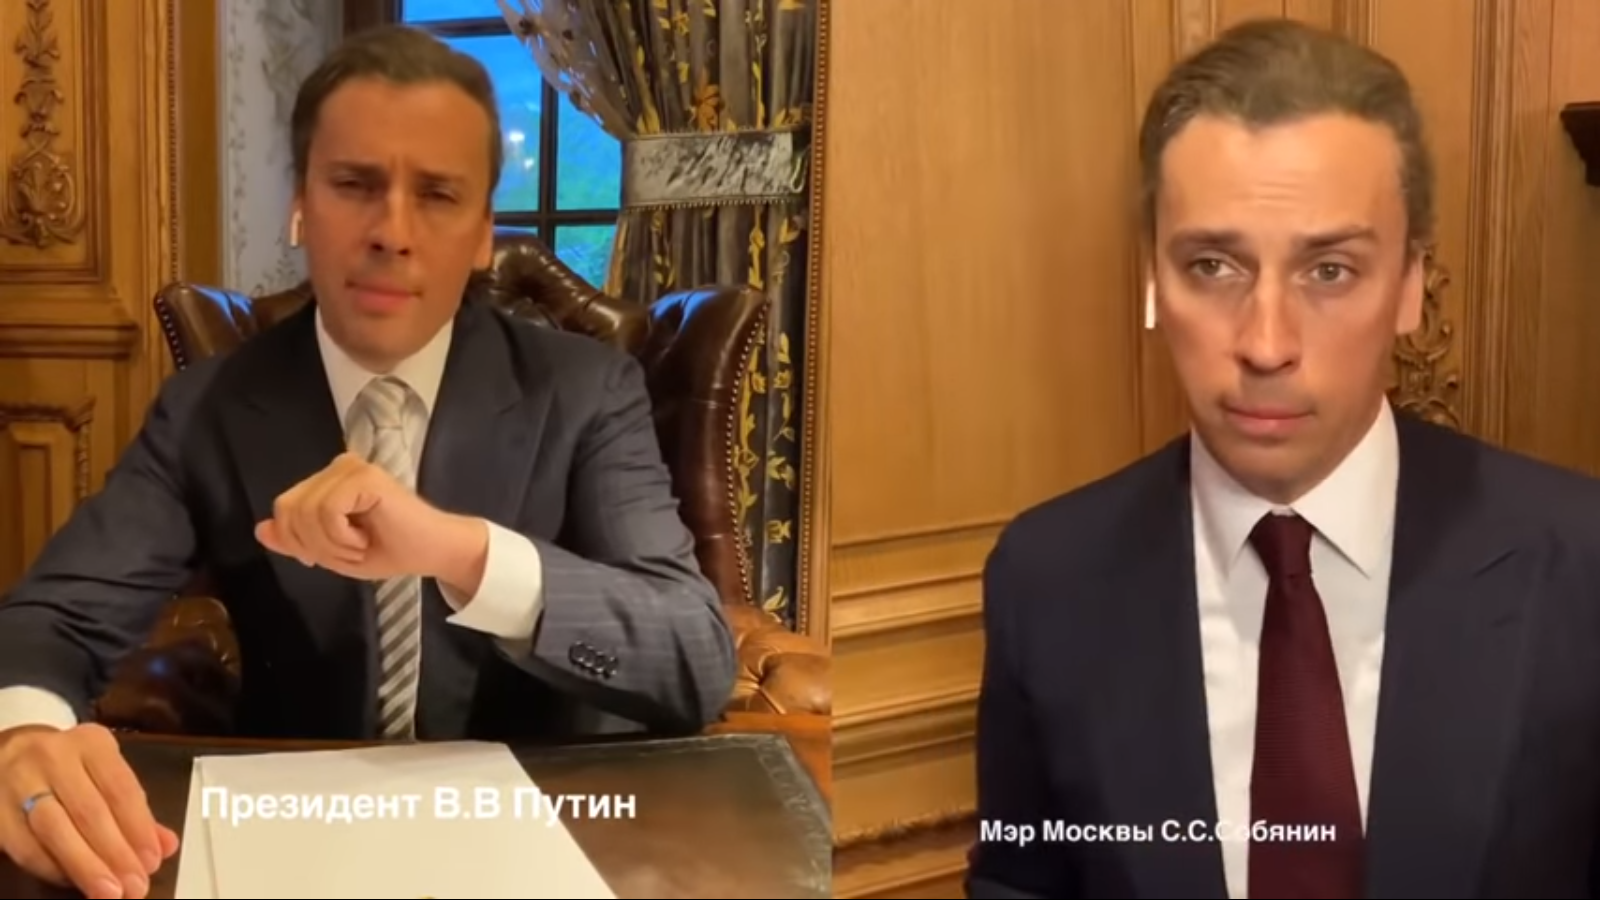 Видео дня: Максим Галкин пародирует диалог Путина и Собянина